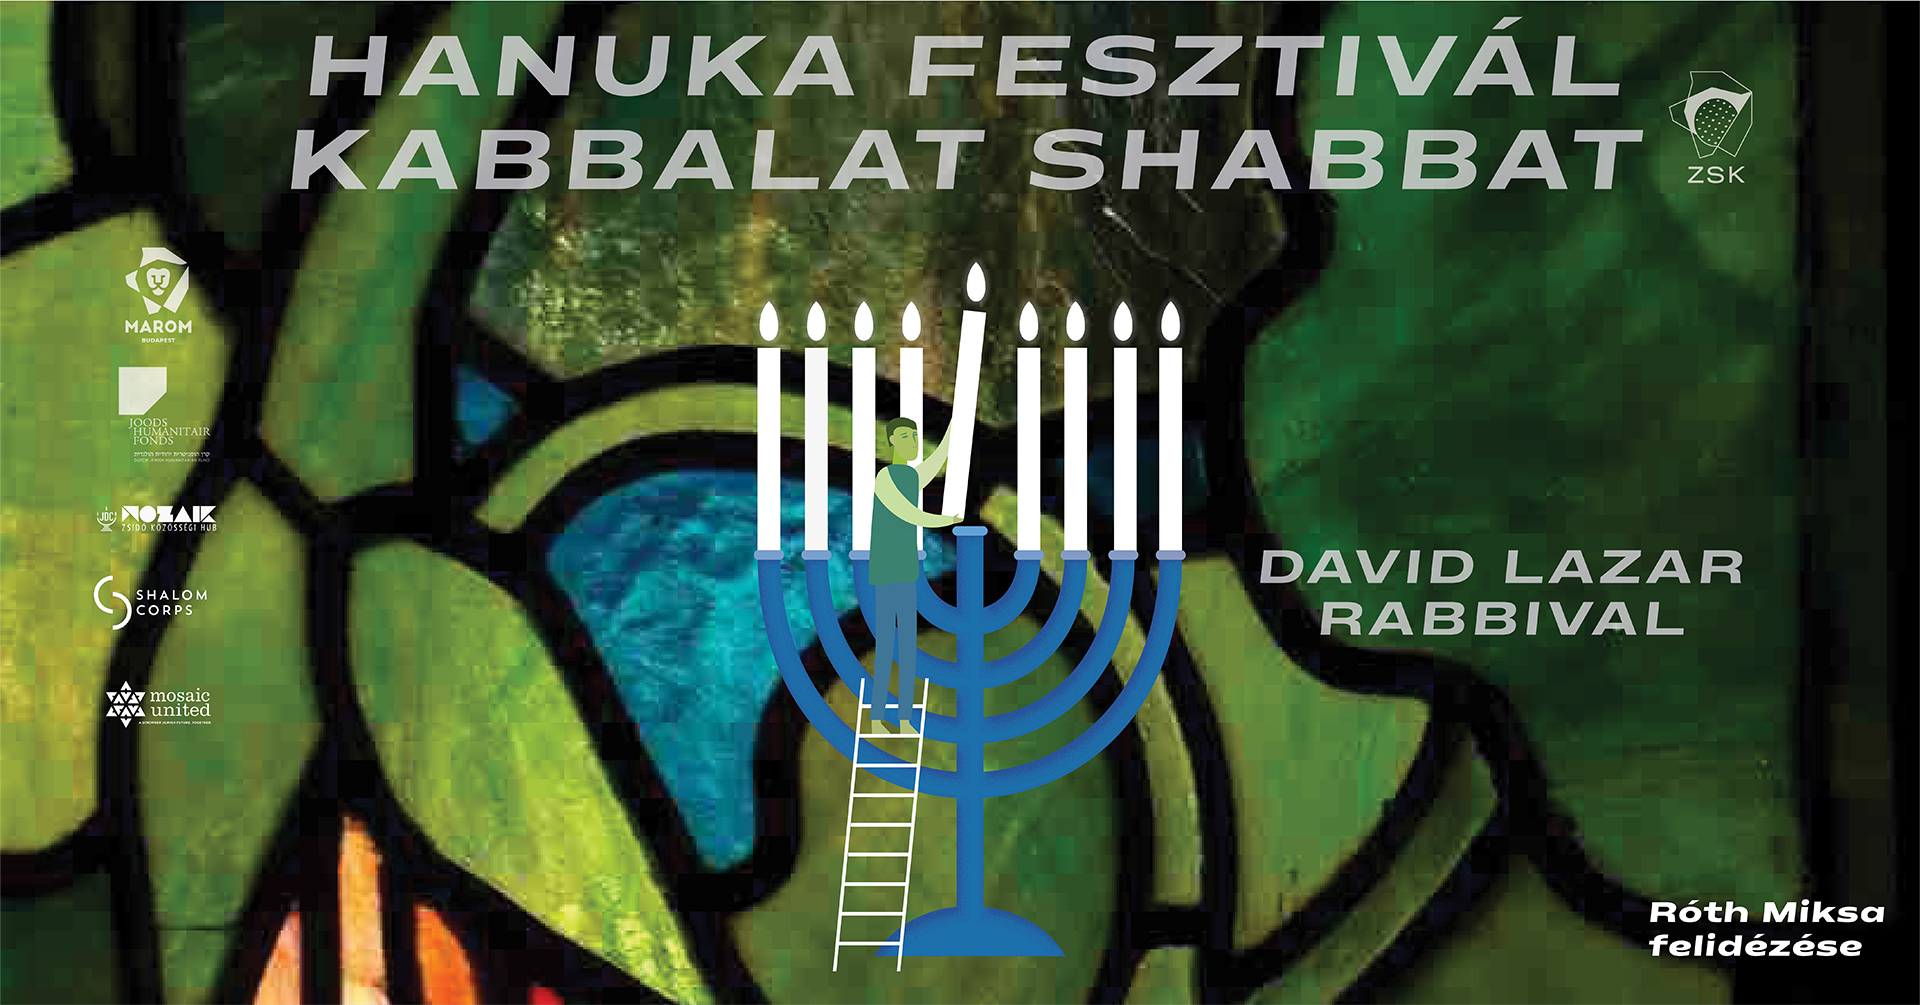 Hanukkah Festival - Kabbalat Sabbath